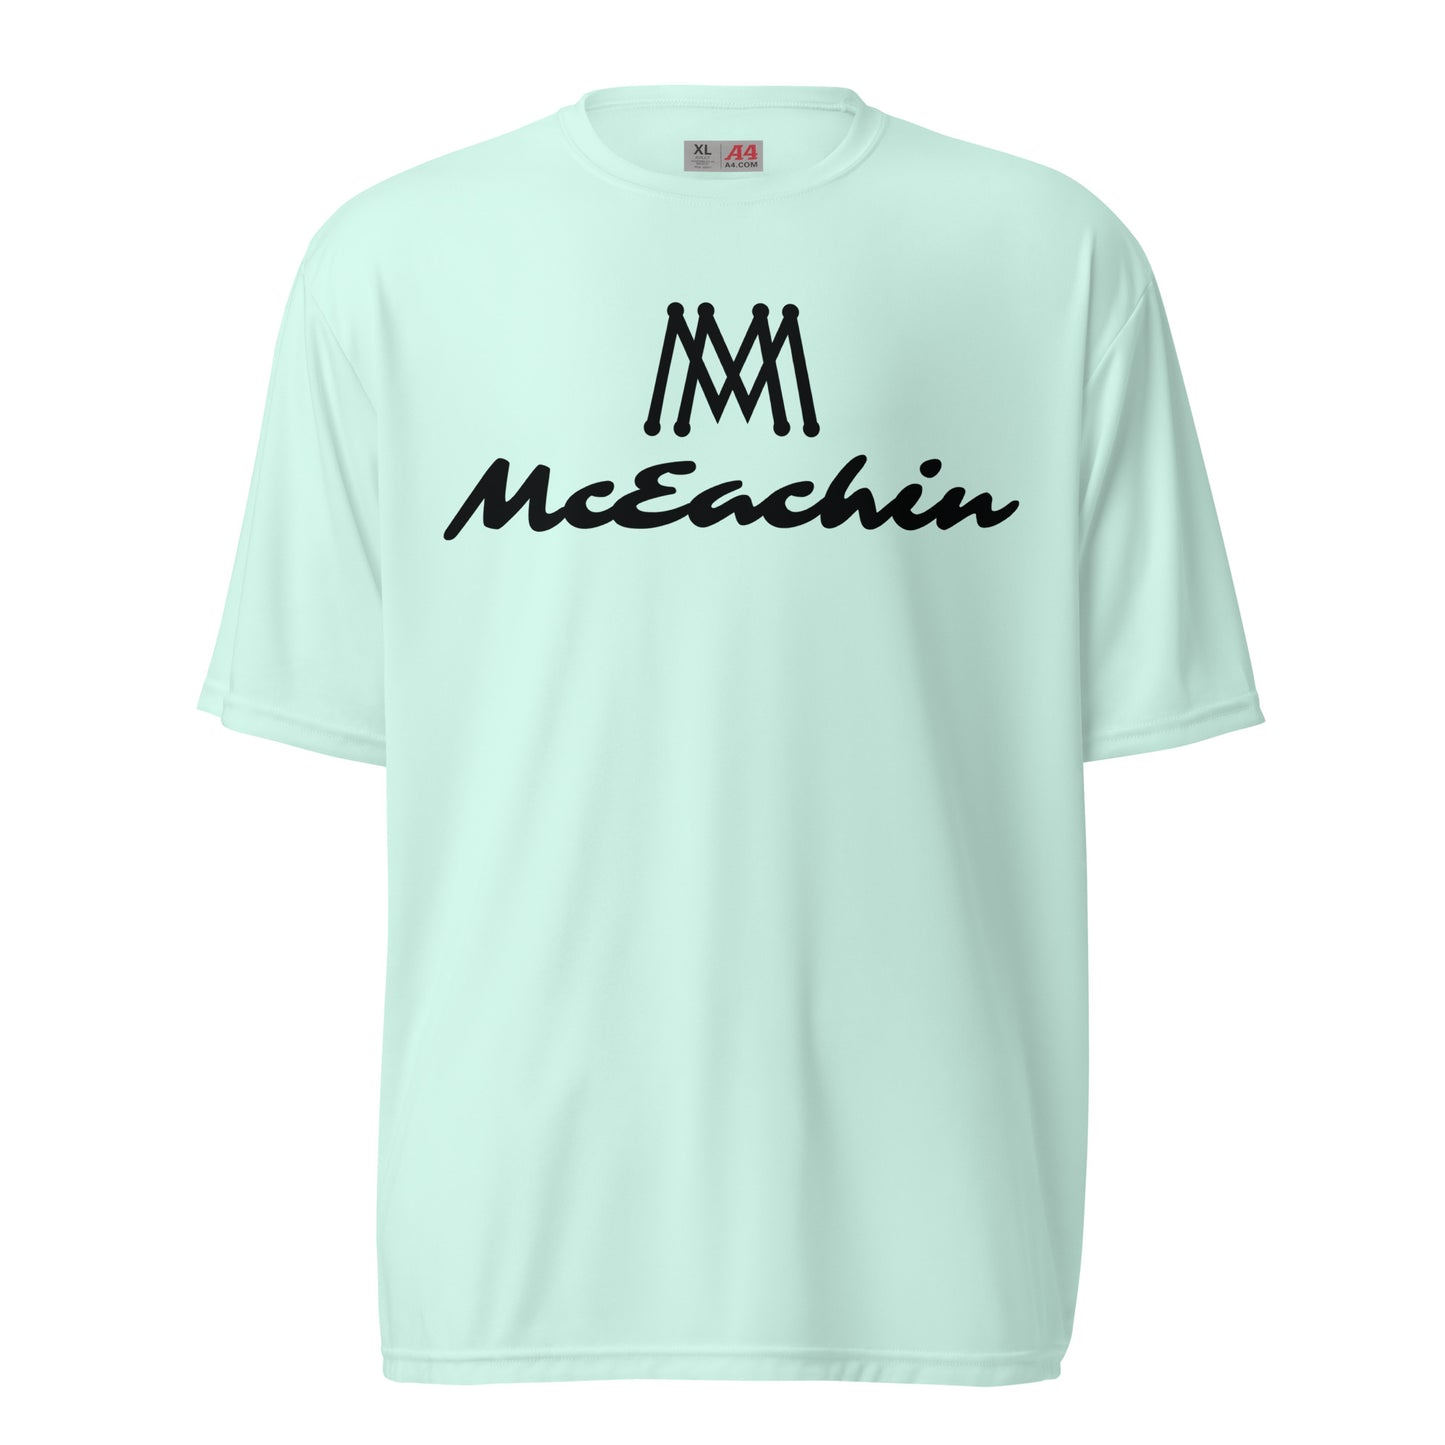 McEachin Black logo Performance Tee